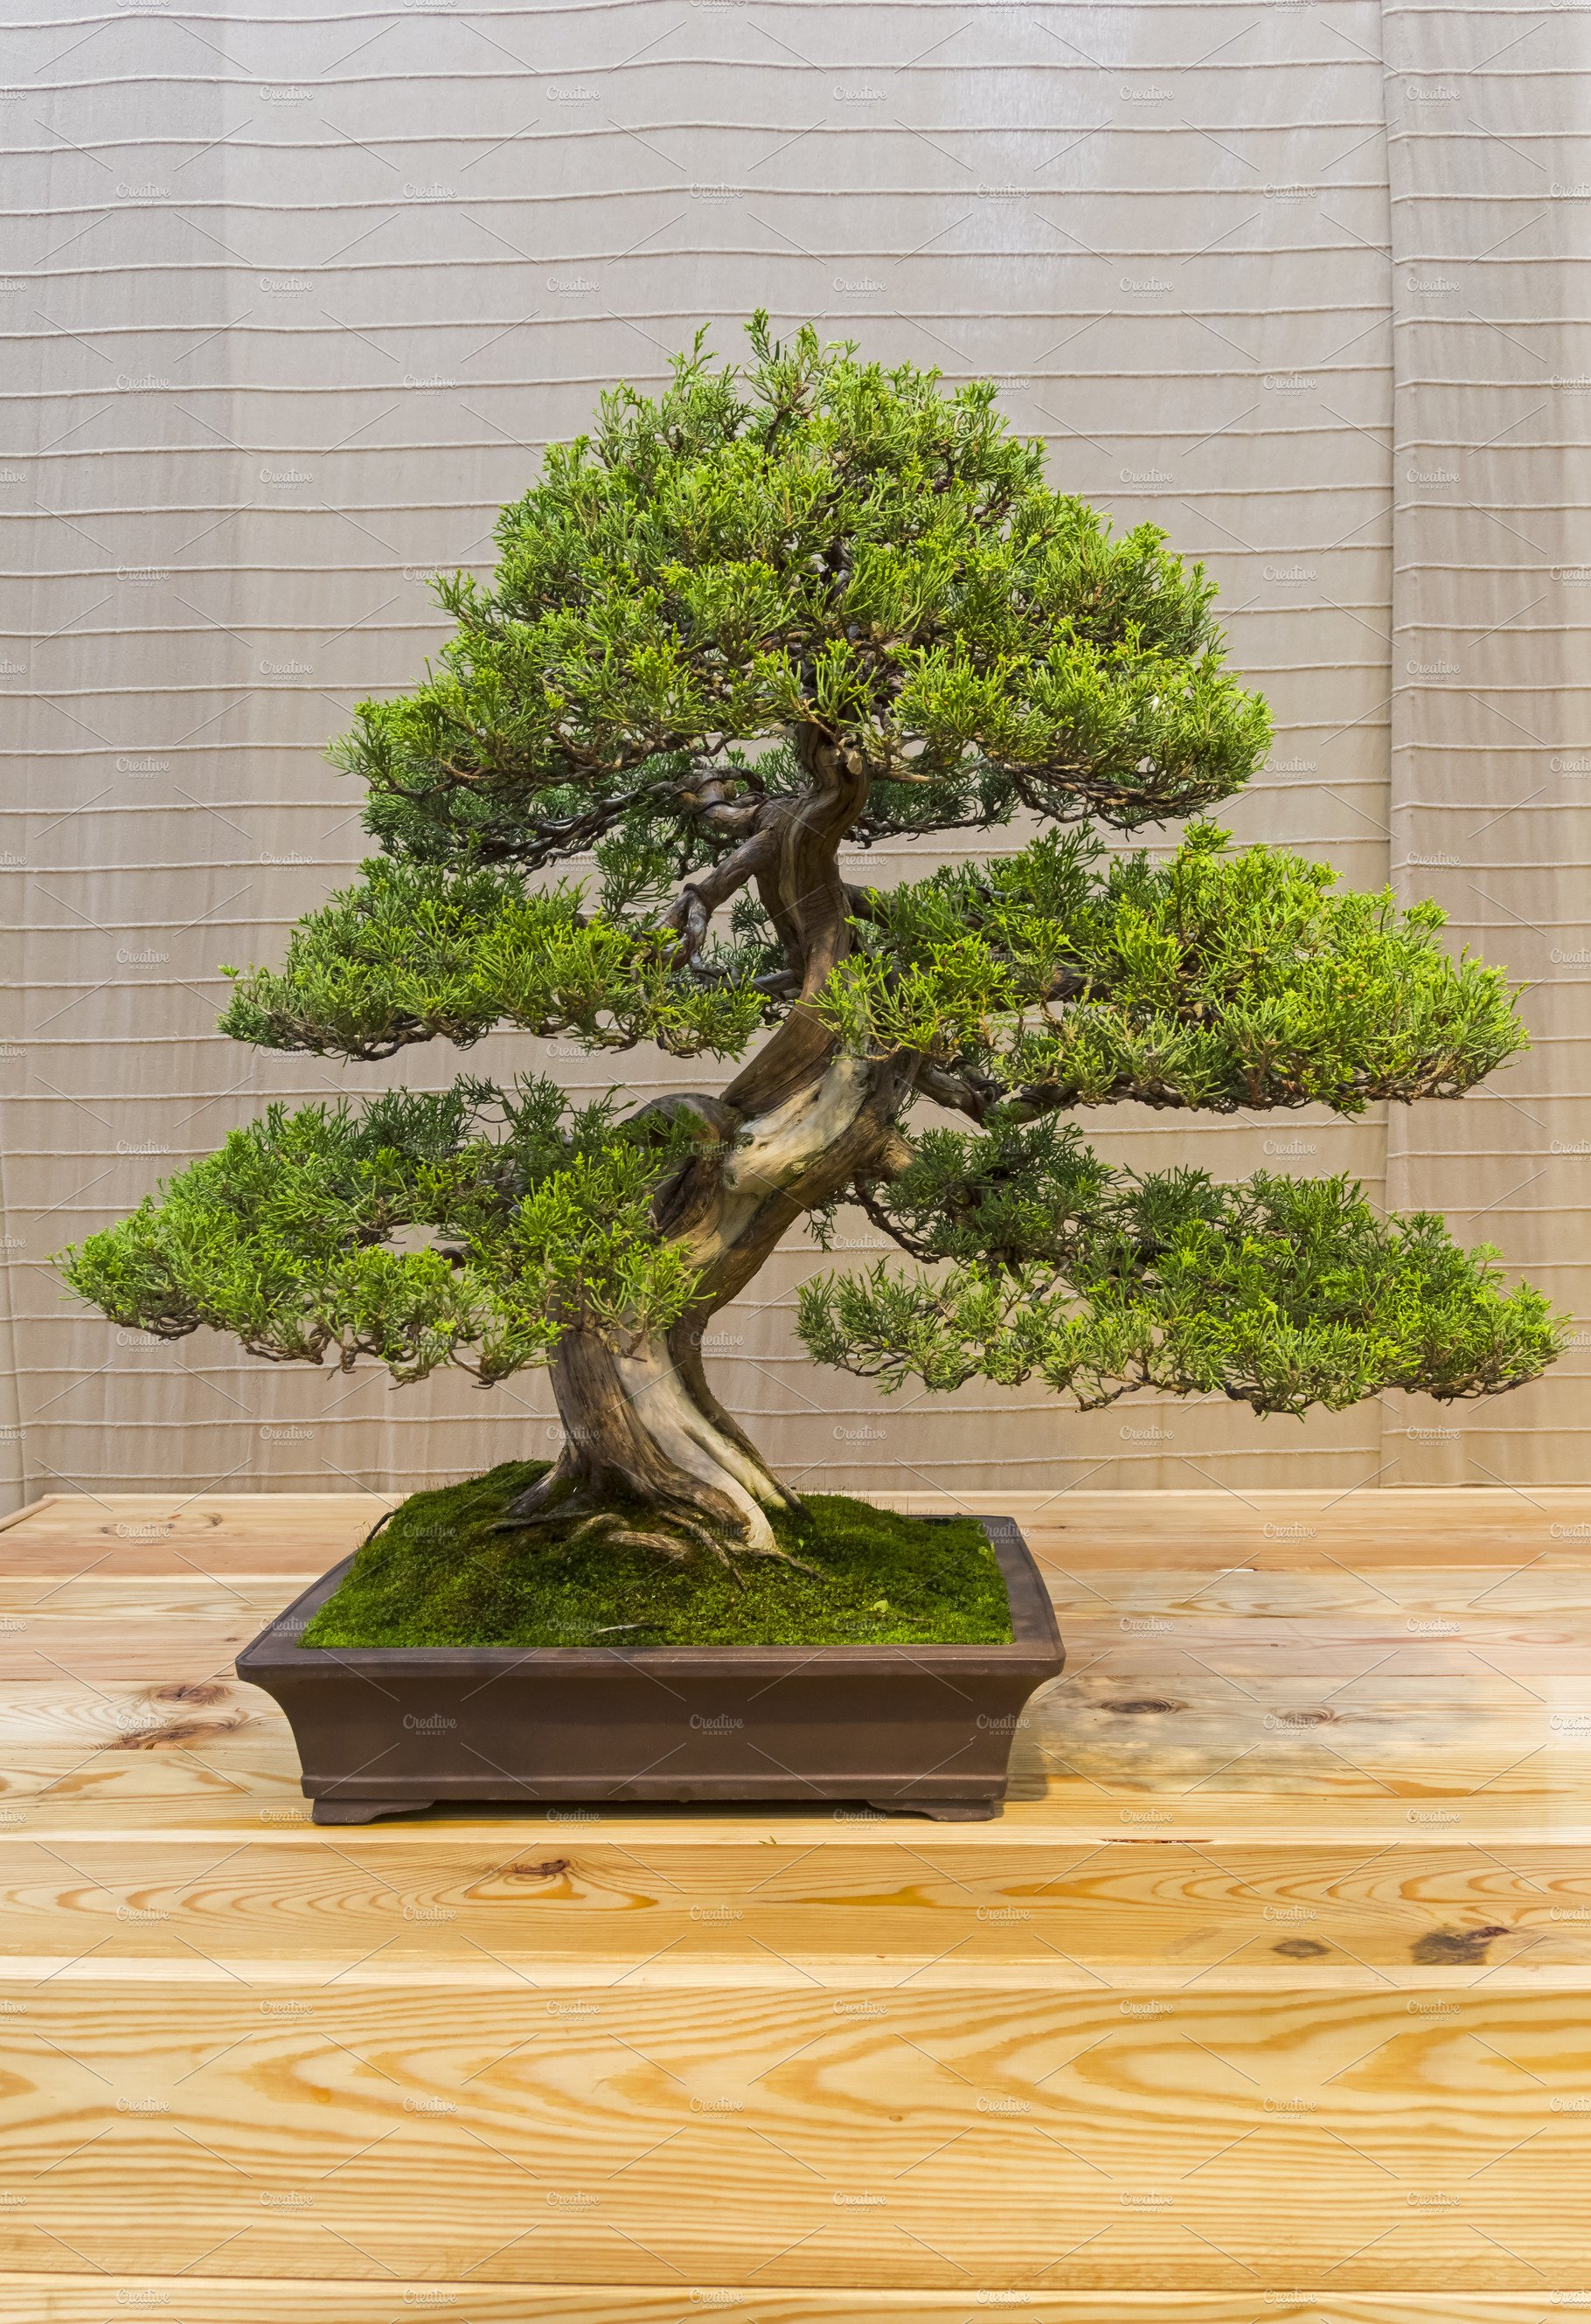 example #1 of bonsai